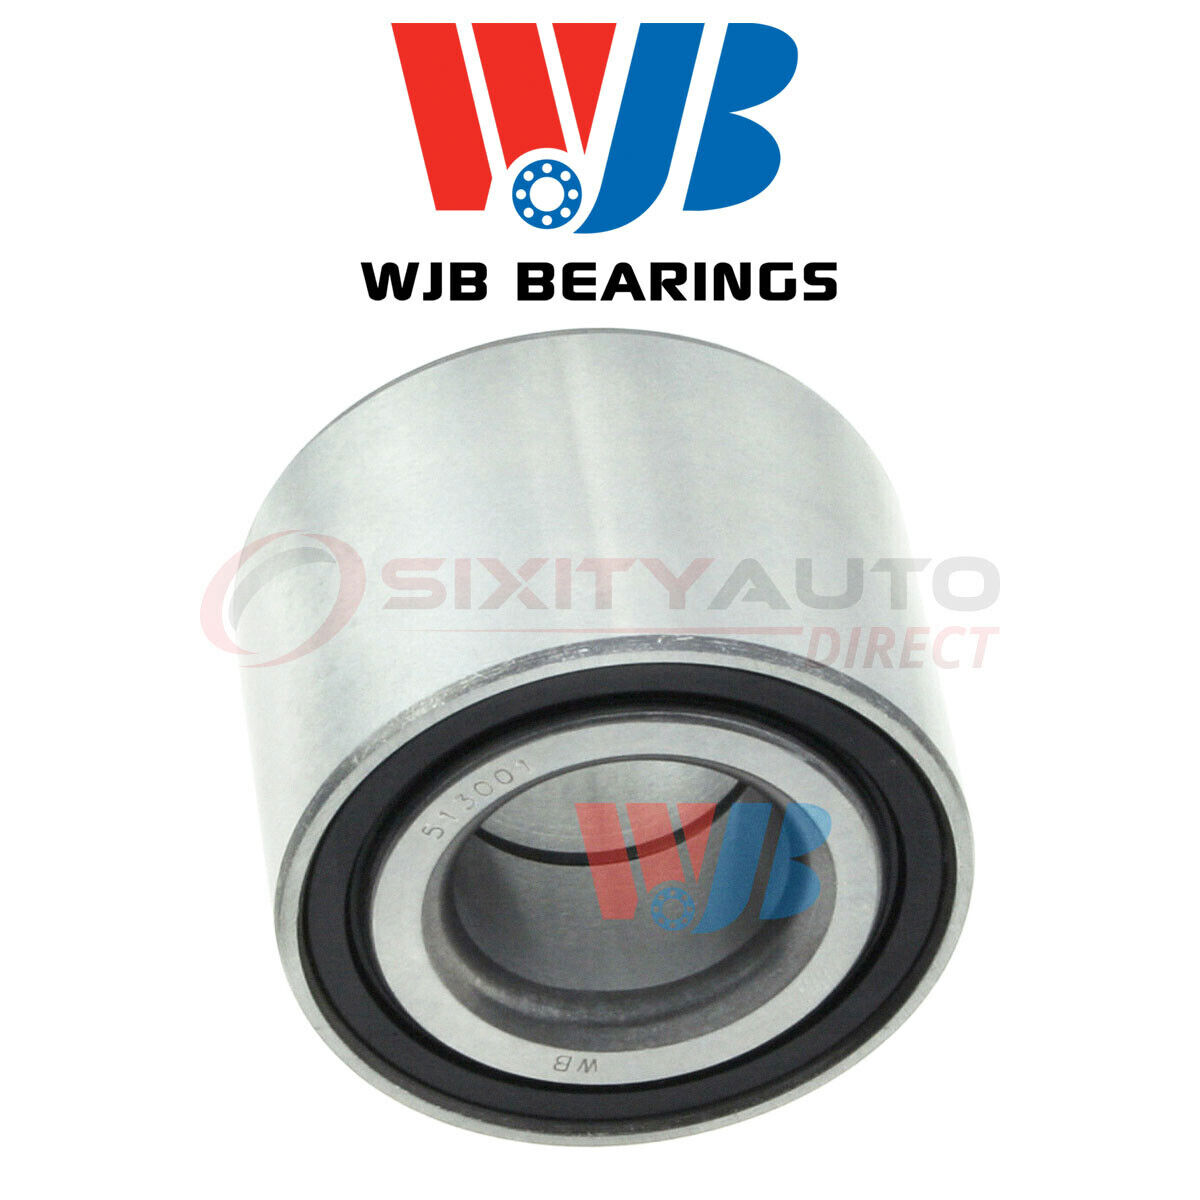 WJB Wheel Bearing for 1987-1991 Ford Tempo 2.3L L4 - Axle Hub Tire vp